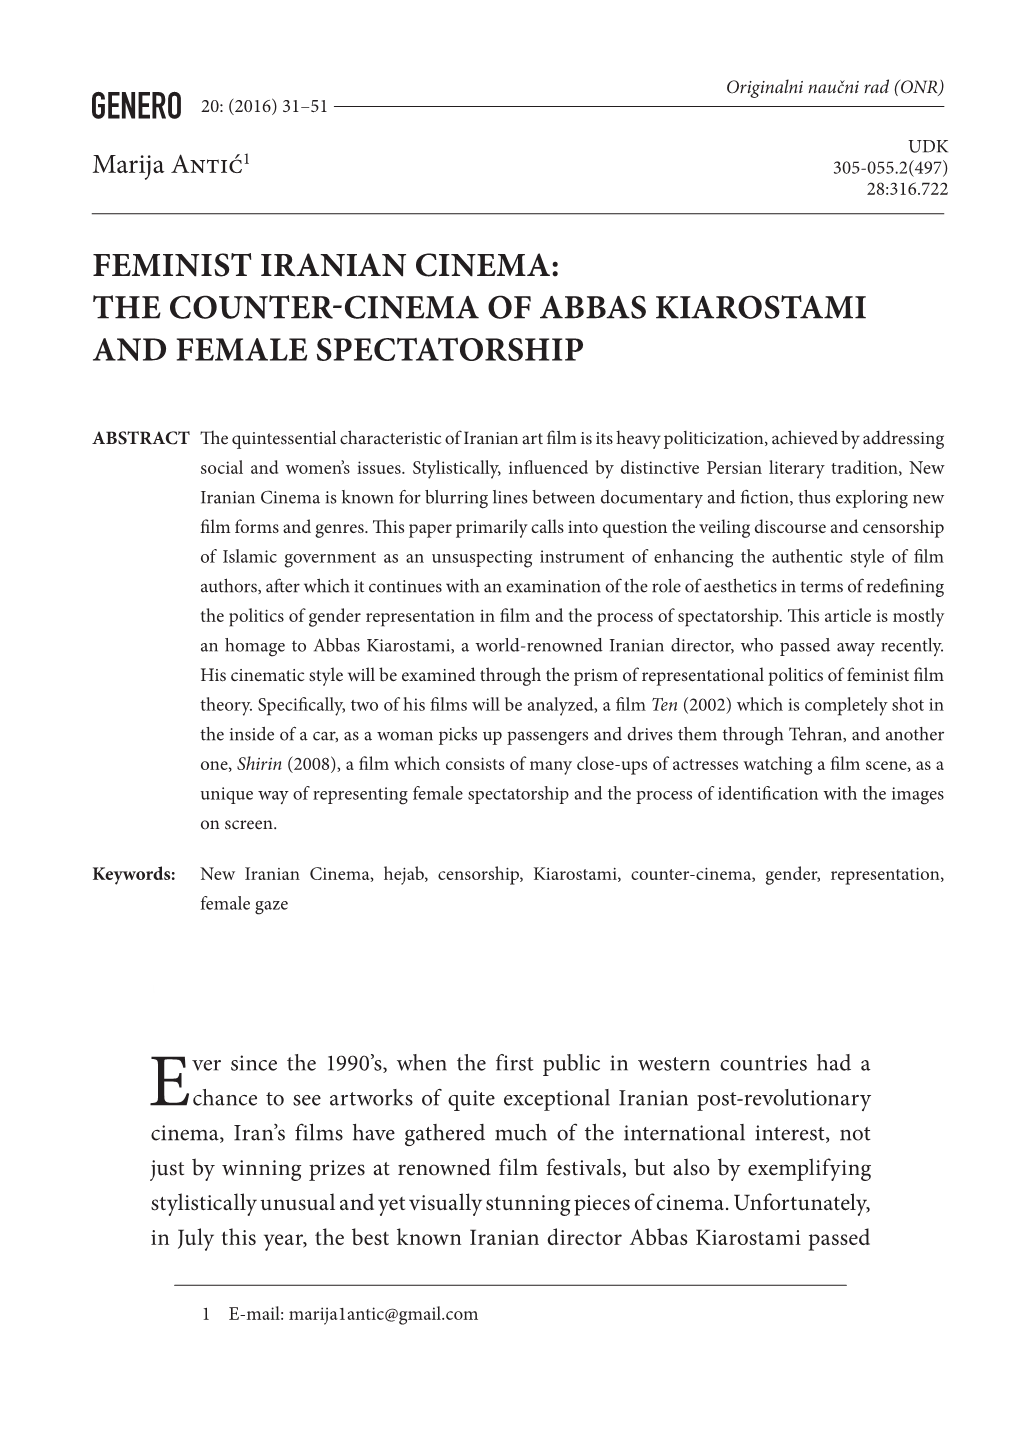 The Counter-Cinema of Abbas Kiarostami and Female Spectatorship